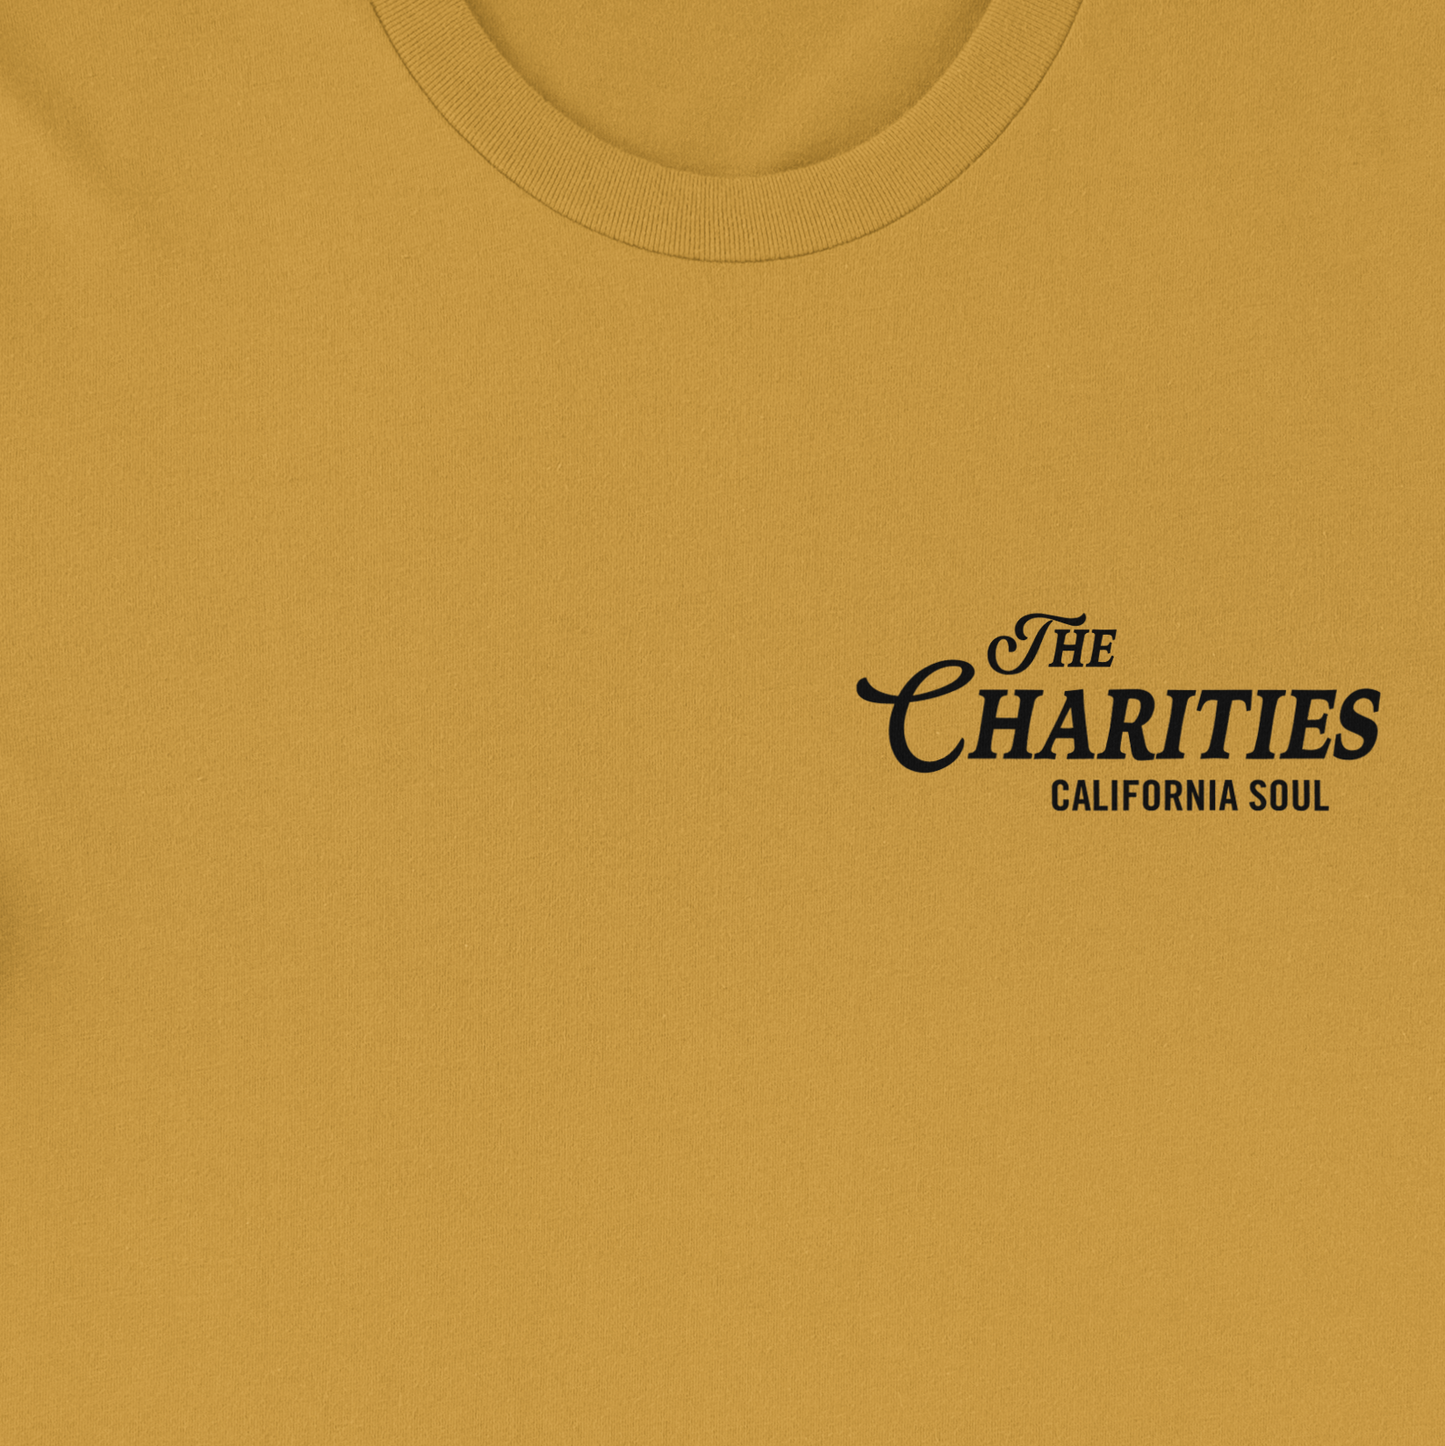 The Charities "California Soul" T